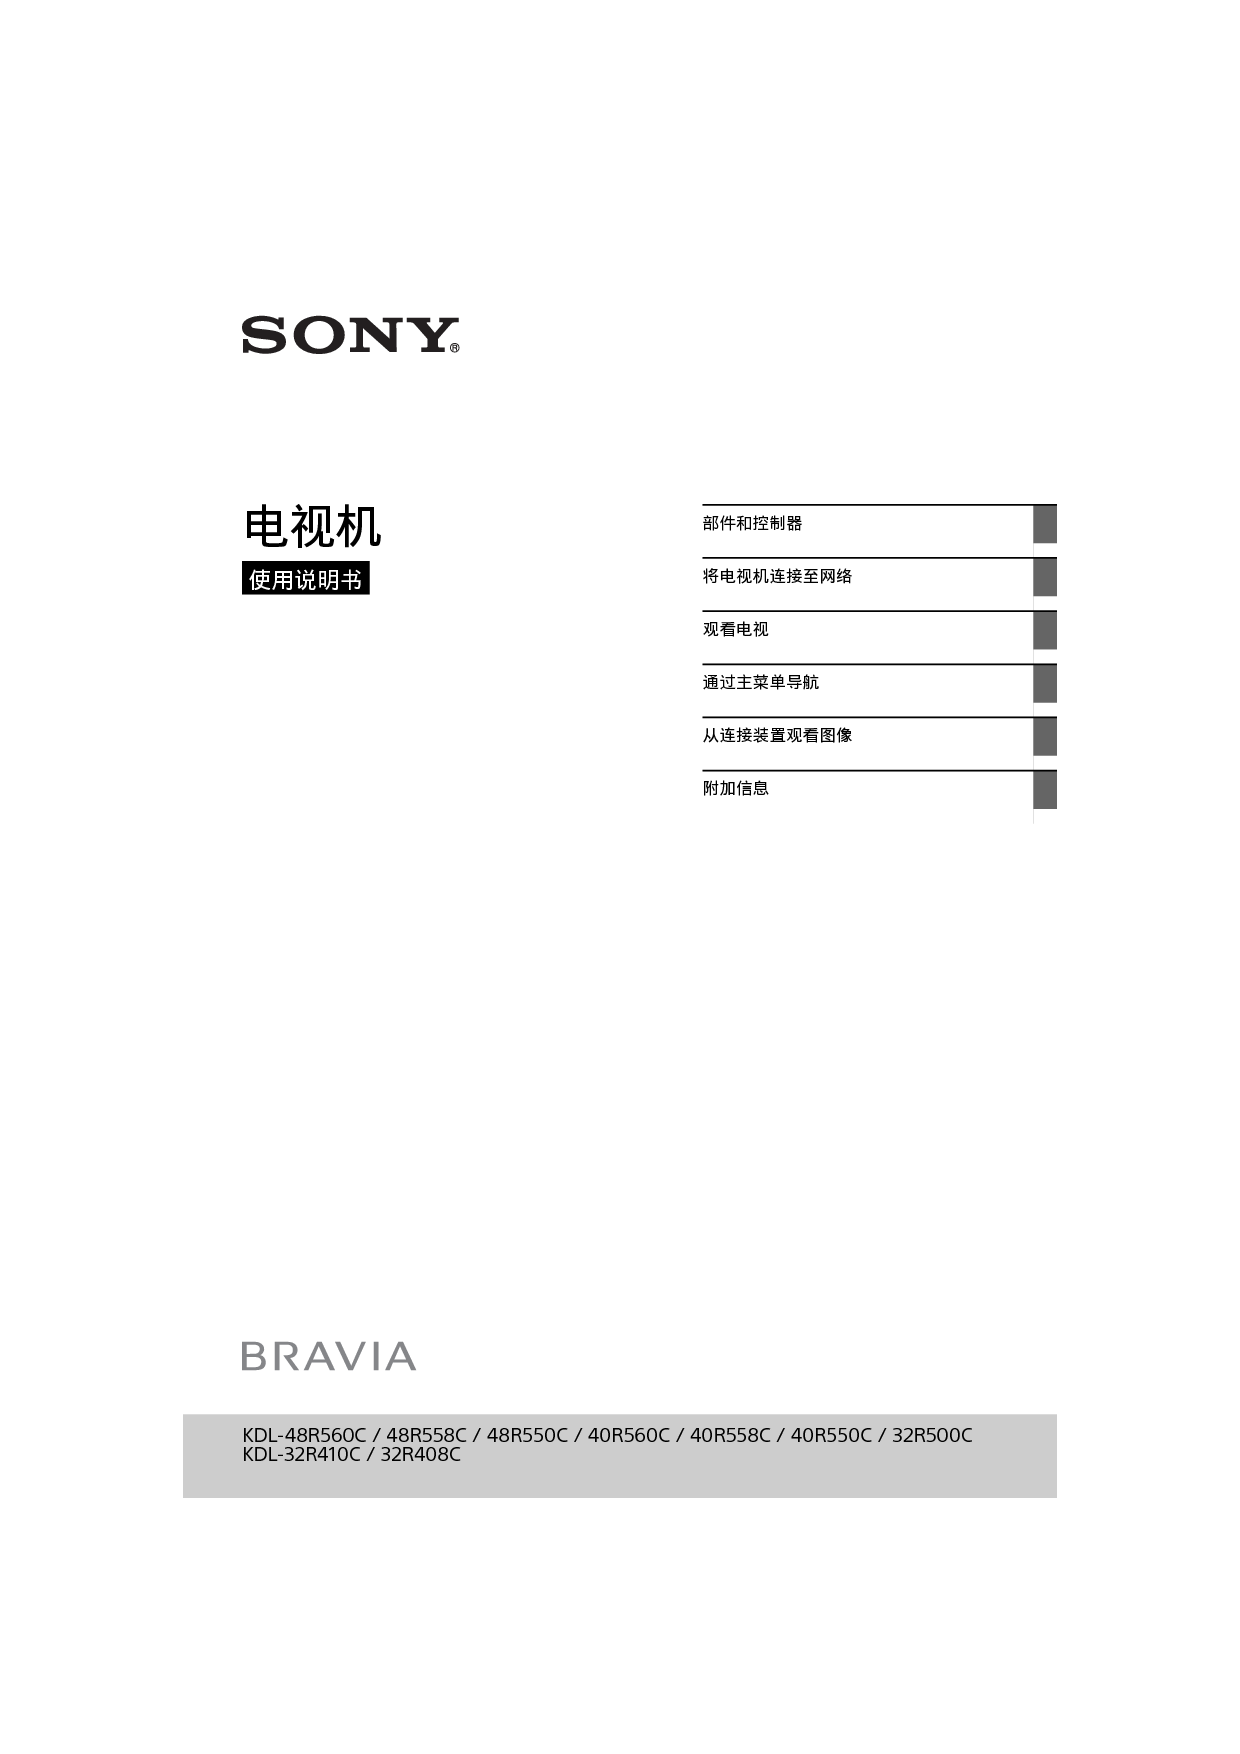 索尼 Sony KDL-32R408C, KDL-40R550C 用户参考指南 封面